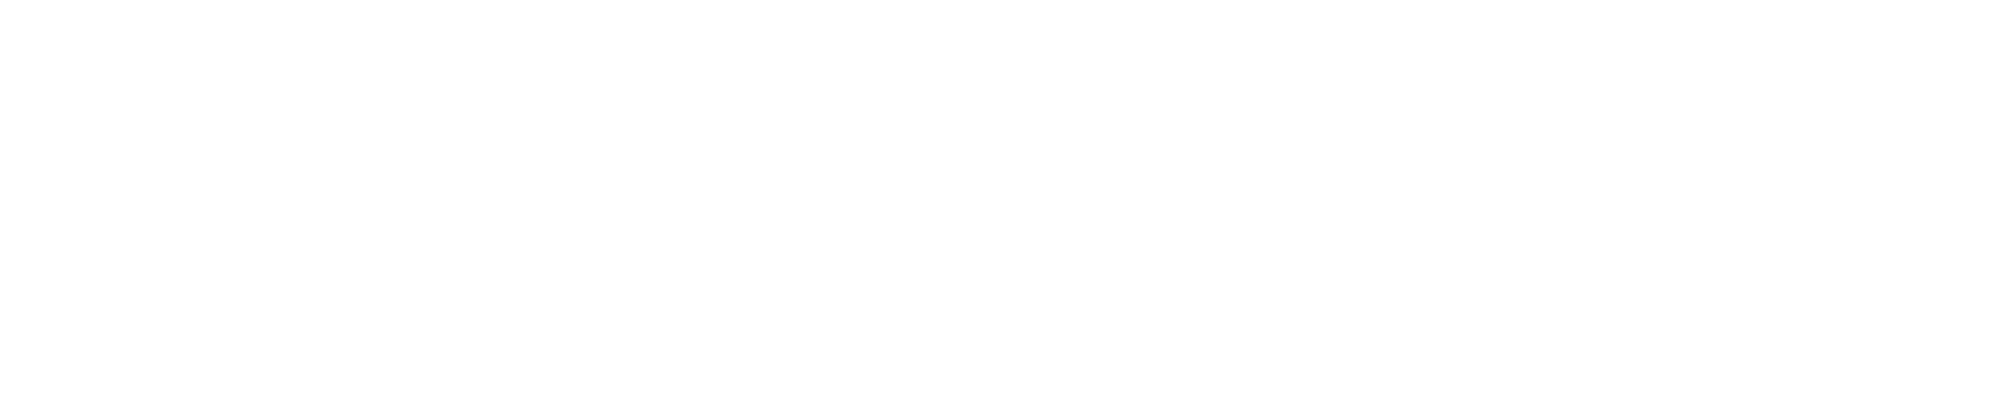 Jewel 360 logo white